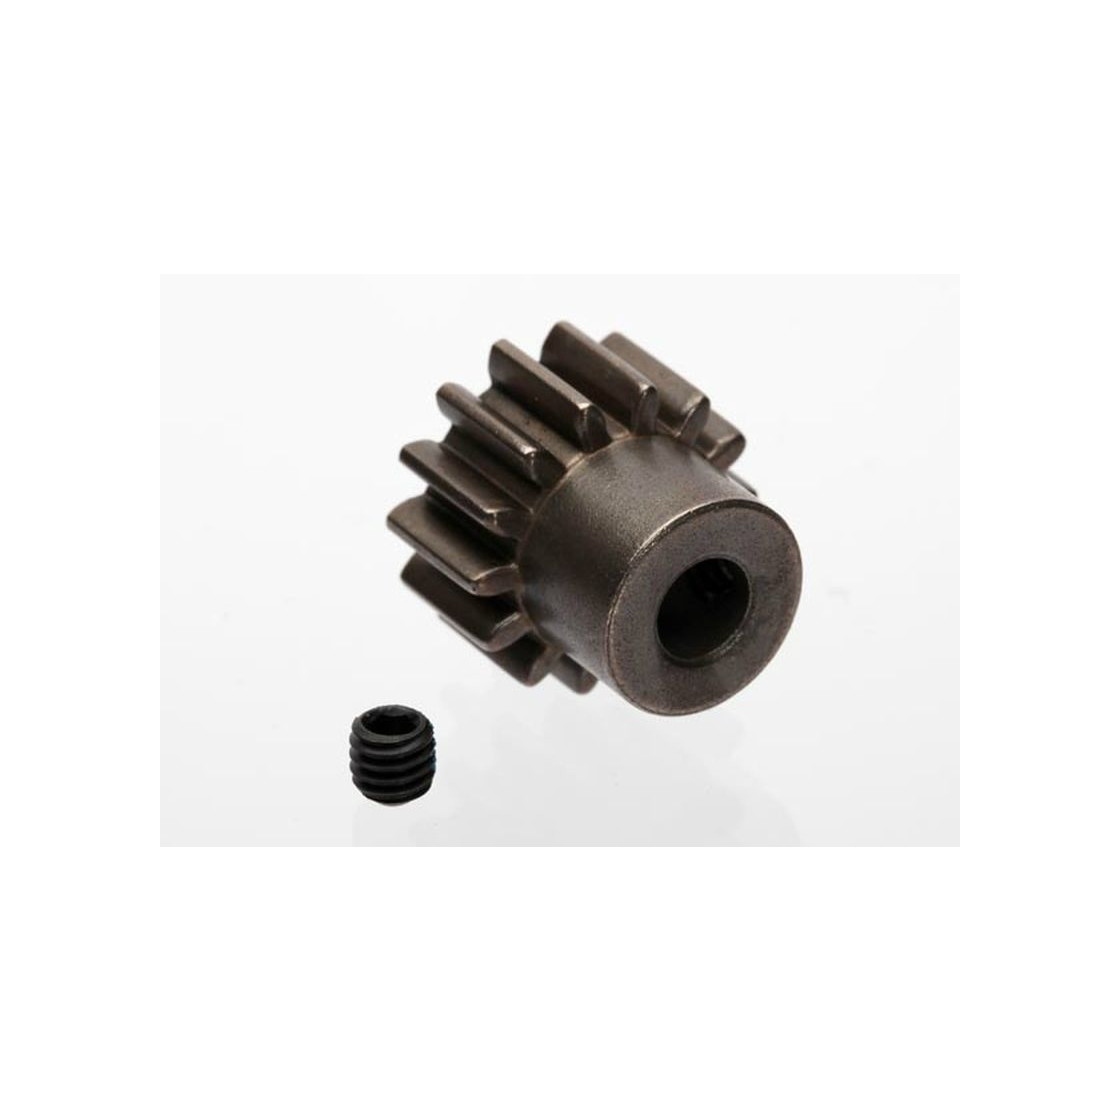 Gear, 14-T pinion (1.0 metric pitch) (fits 5mm shaft)/ set s